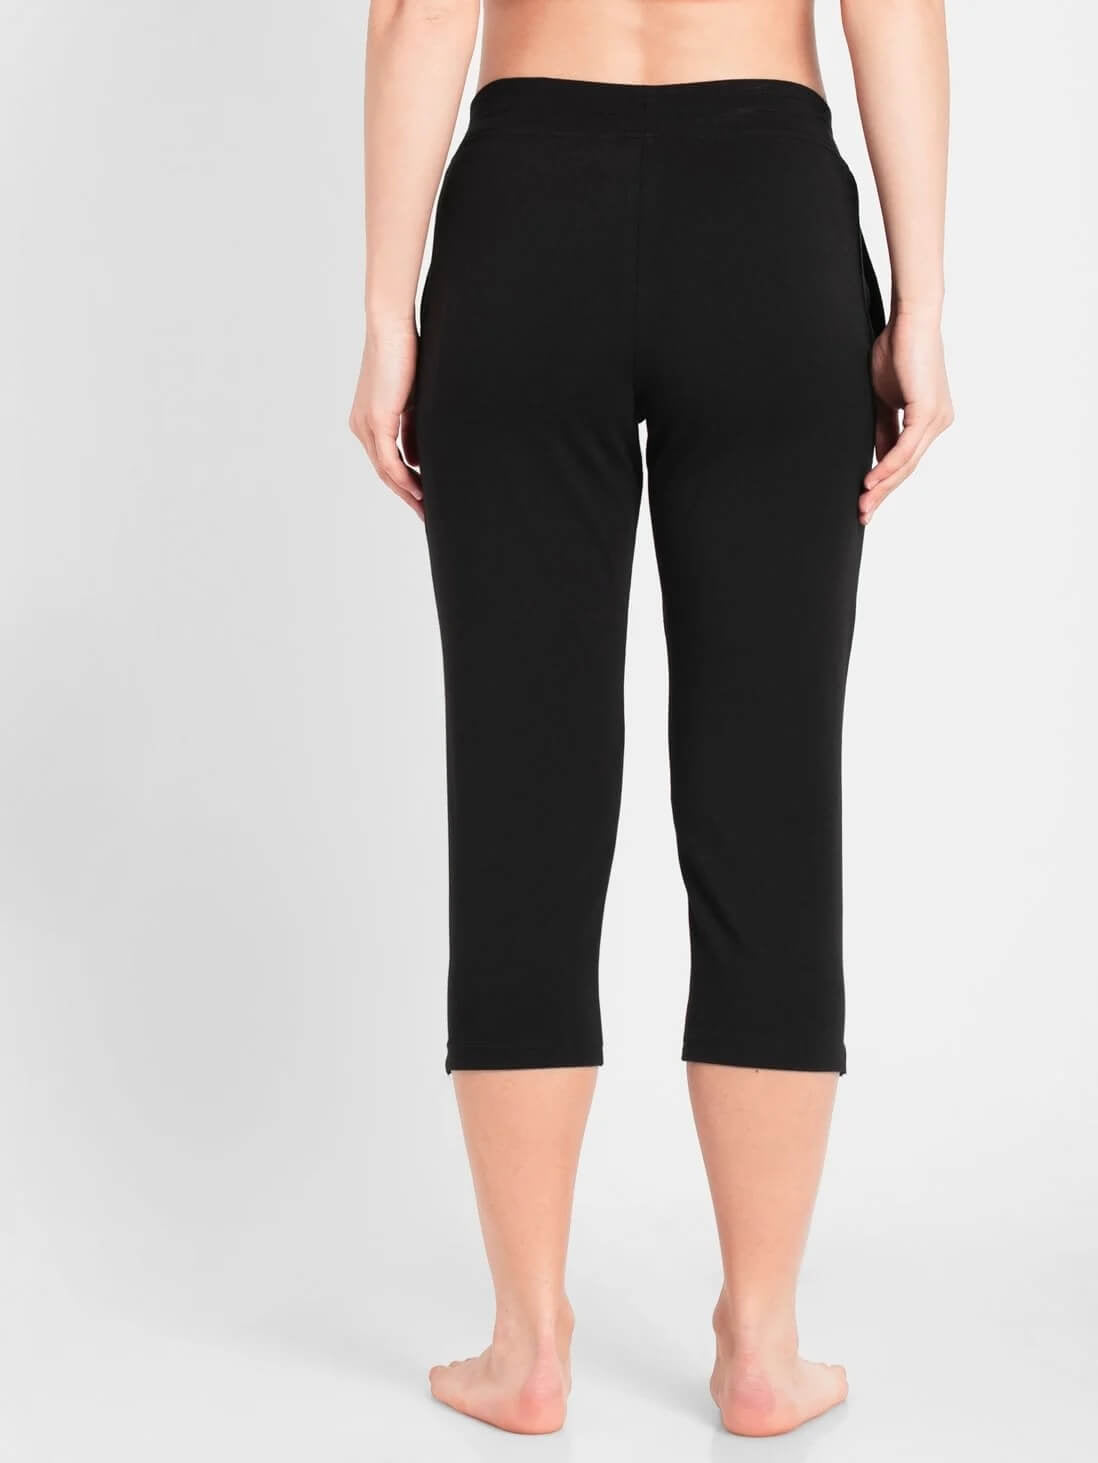 Jockey Black Capri Pants for Women #1300 [New Fit]